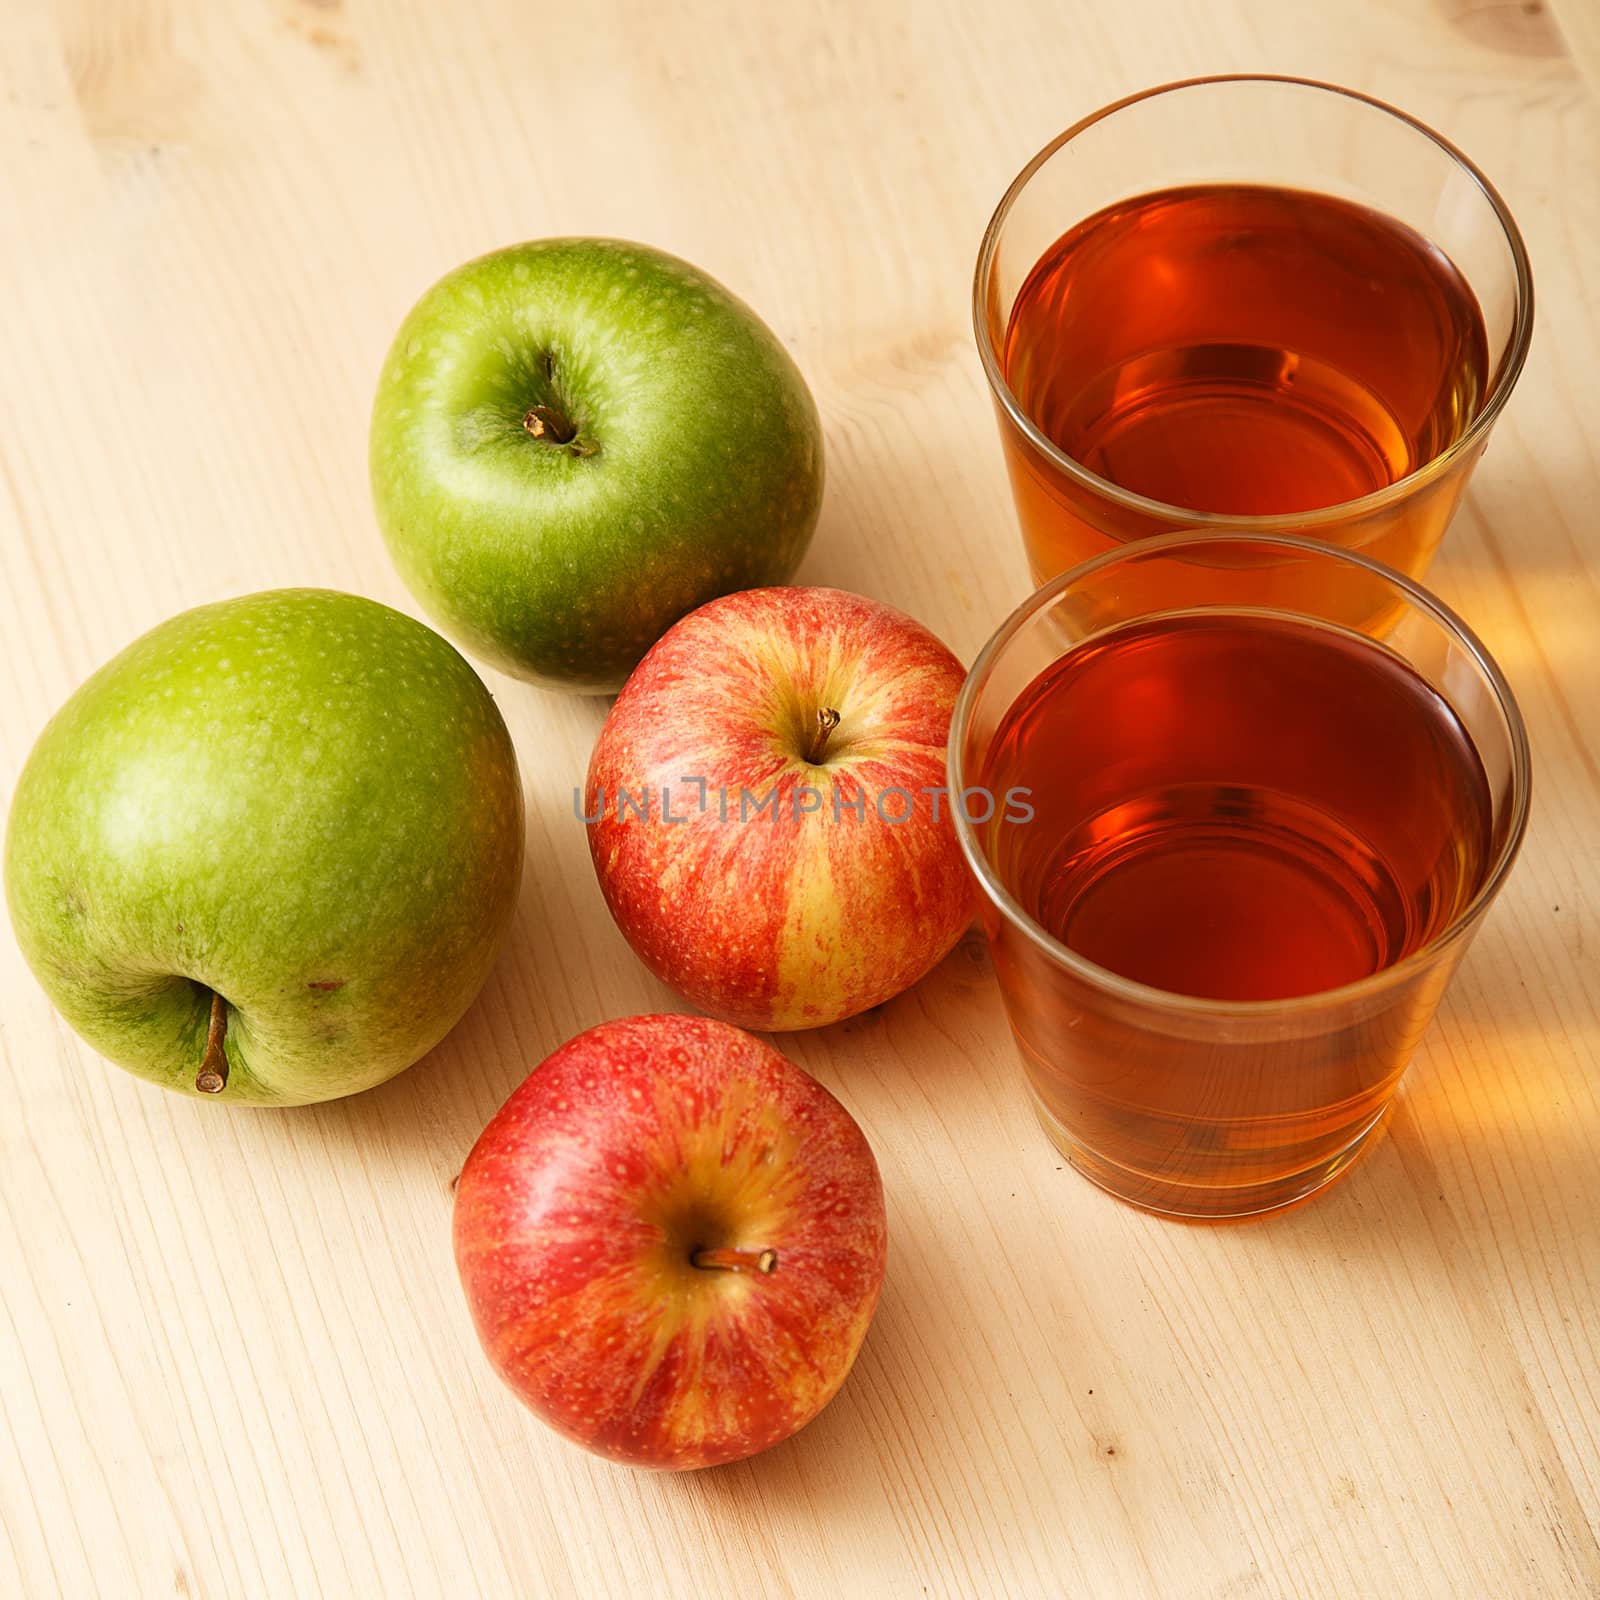 Glass of apple juice by rufatjumali